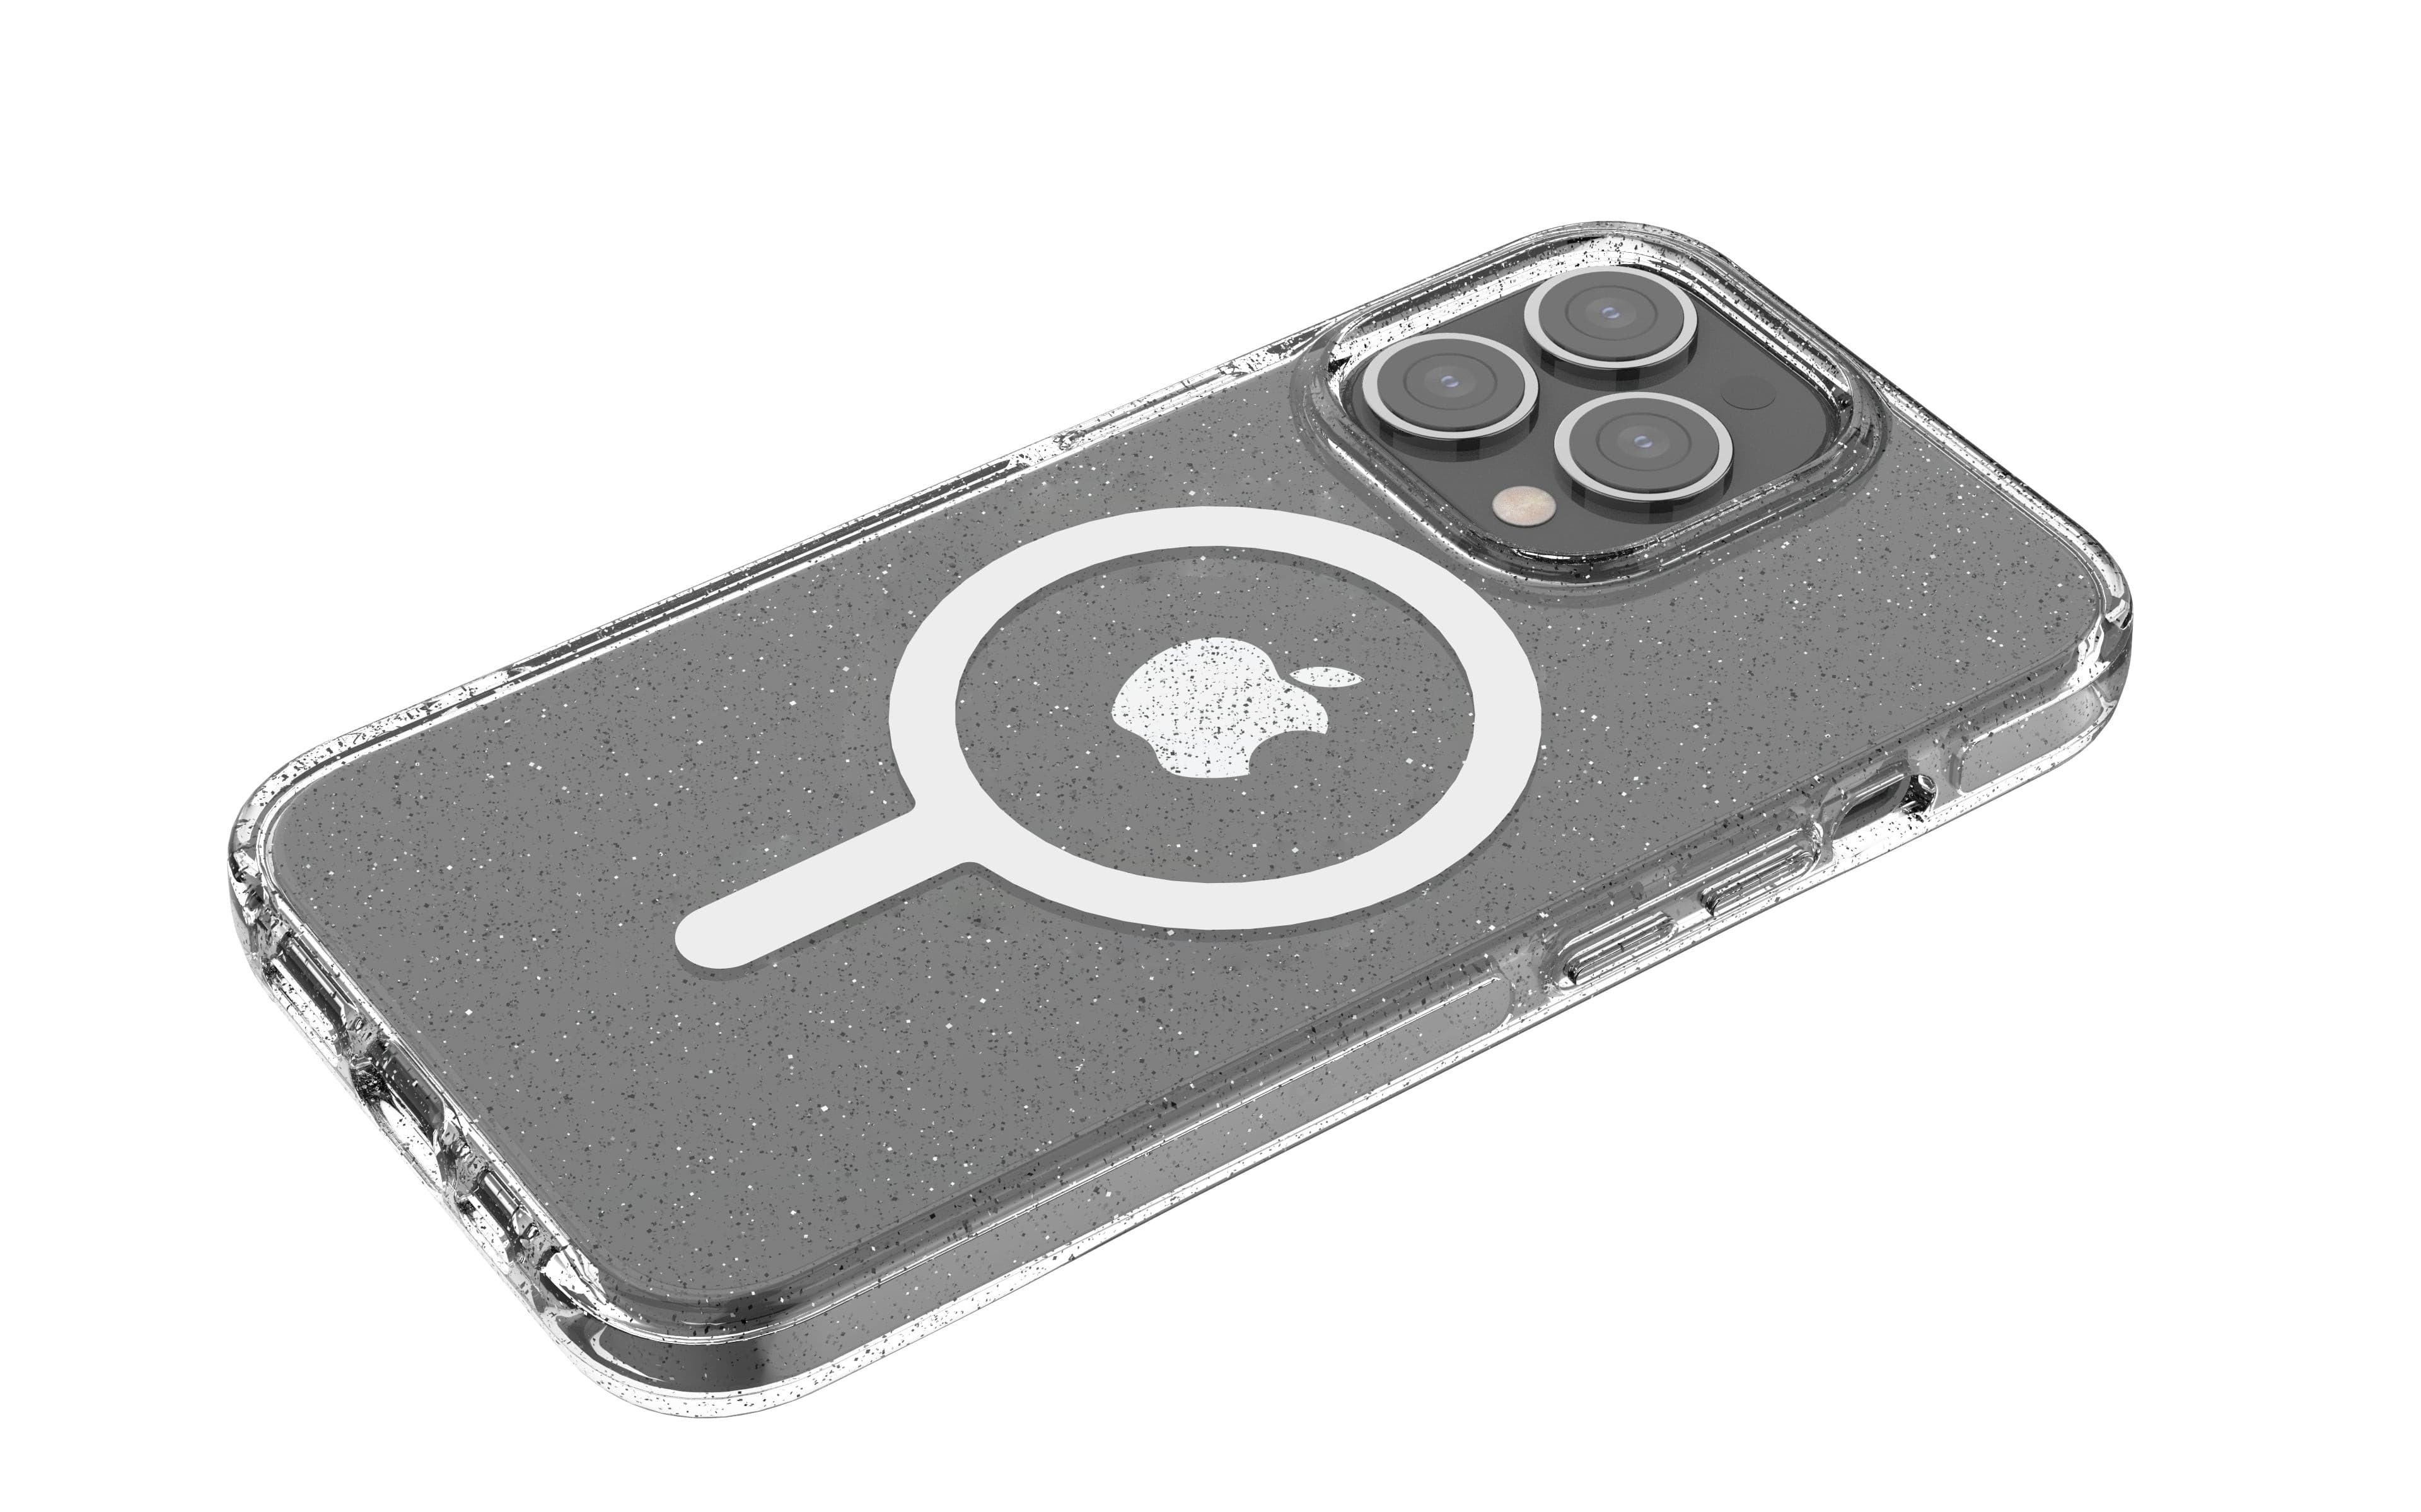 Impact Zero Galaxy Protective Case for iPhone 13 Pro Max.